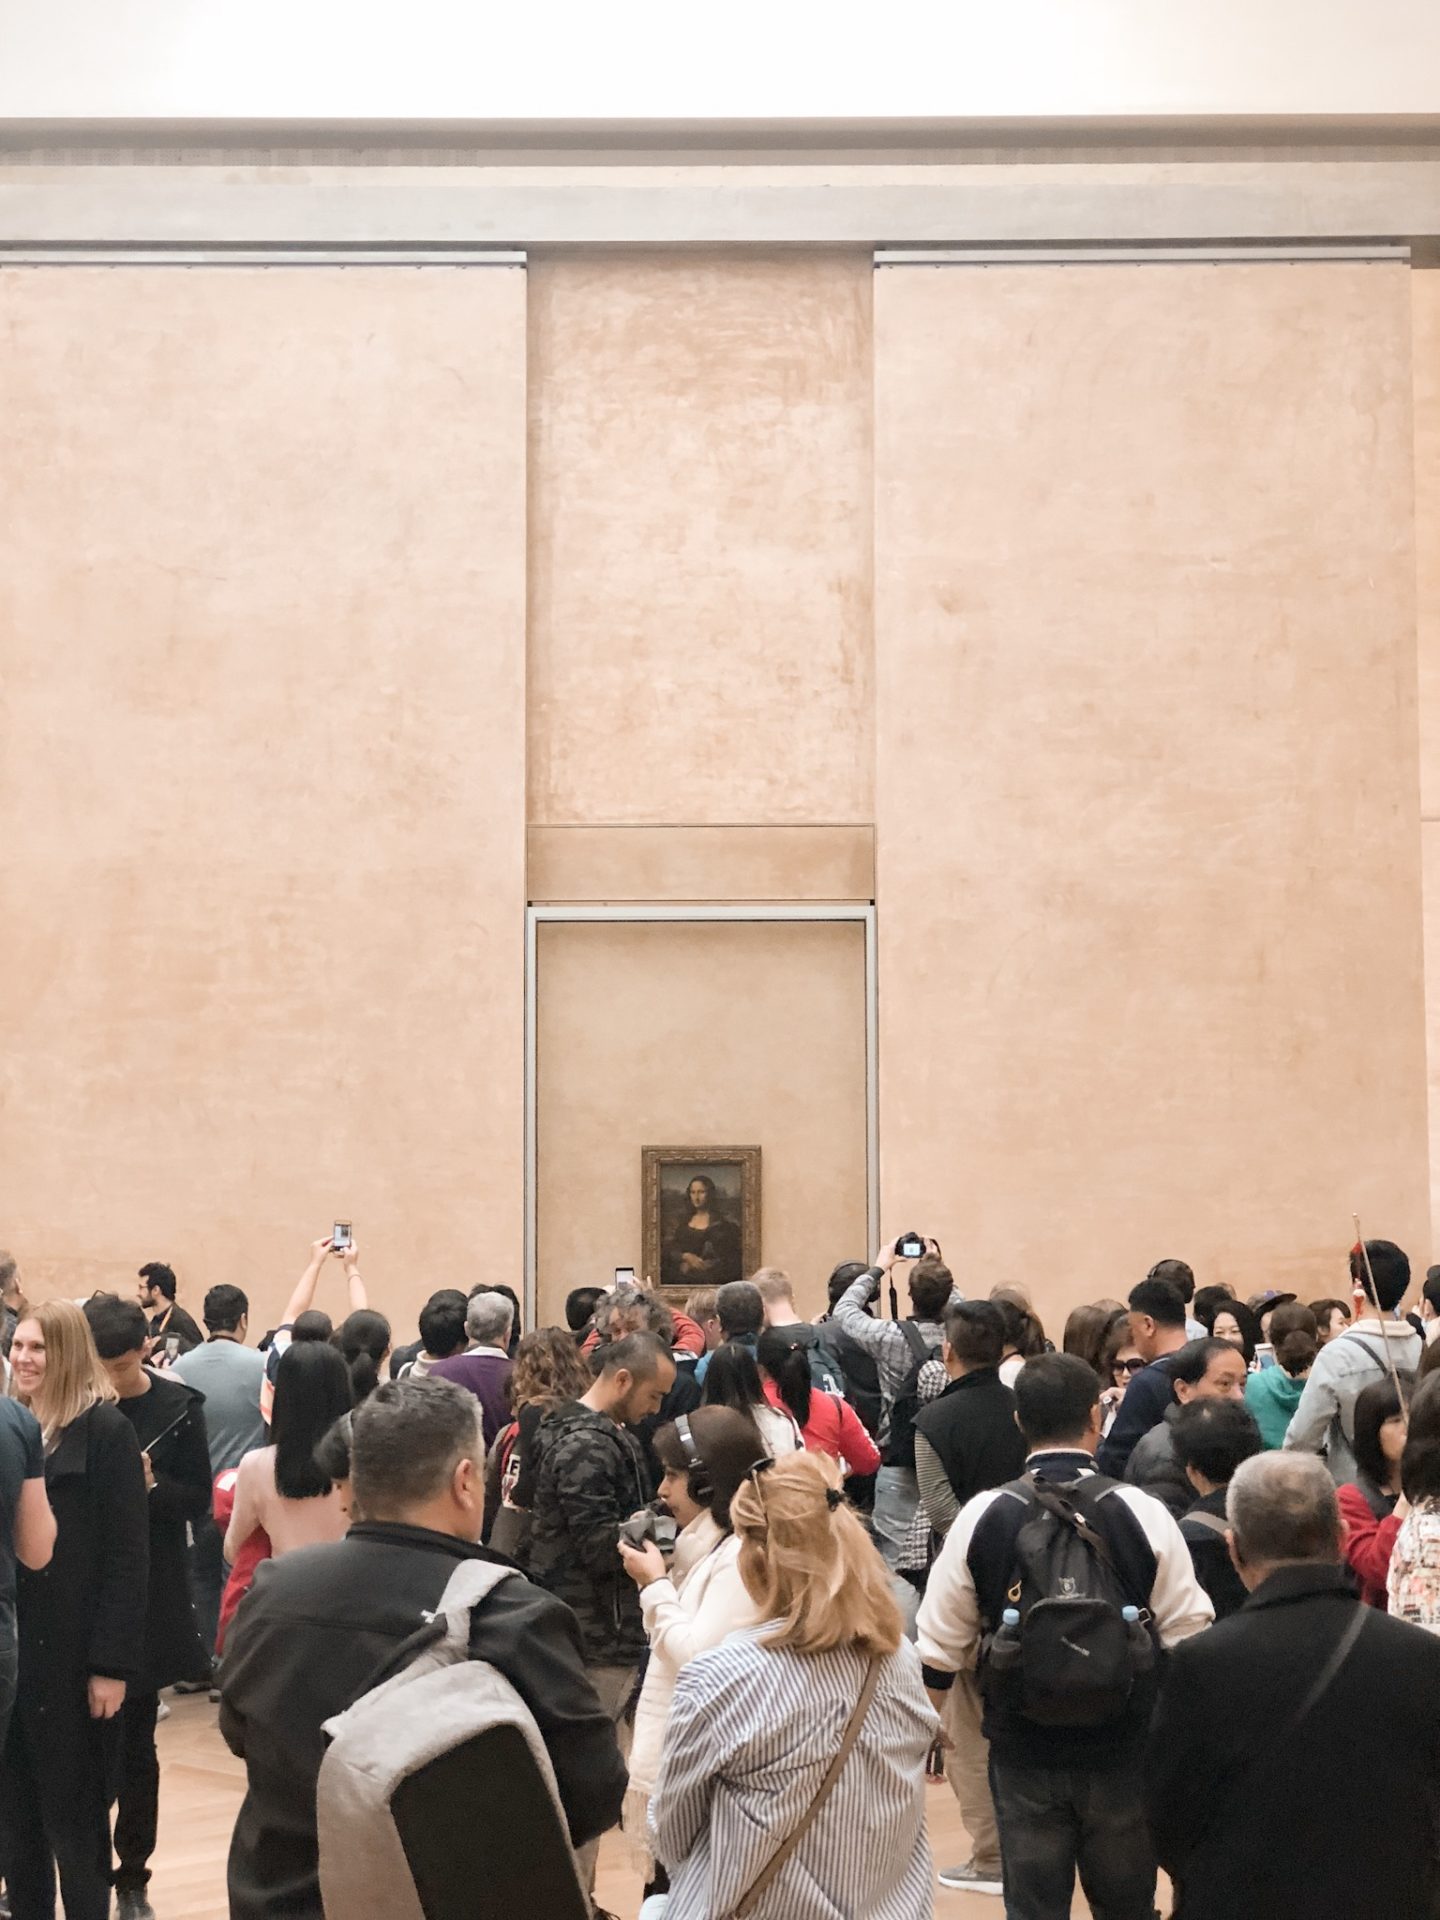 Best Art Museums in Paris Guide